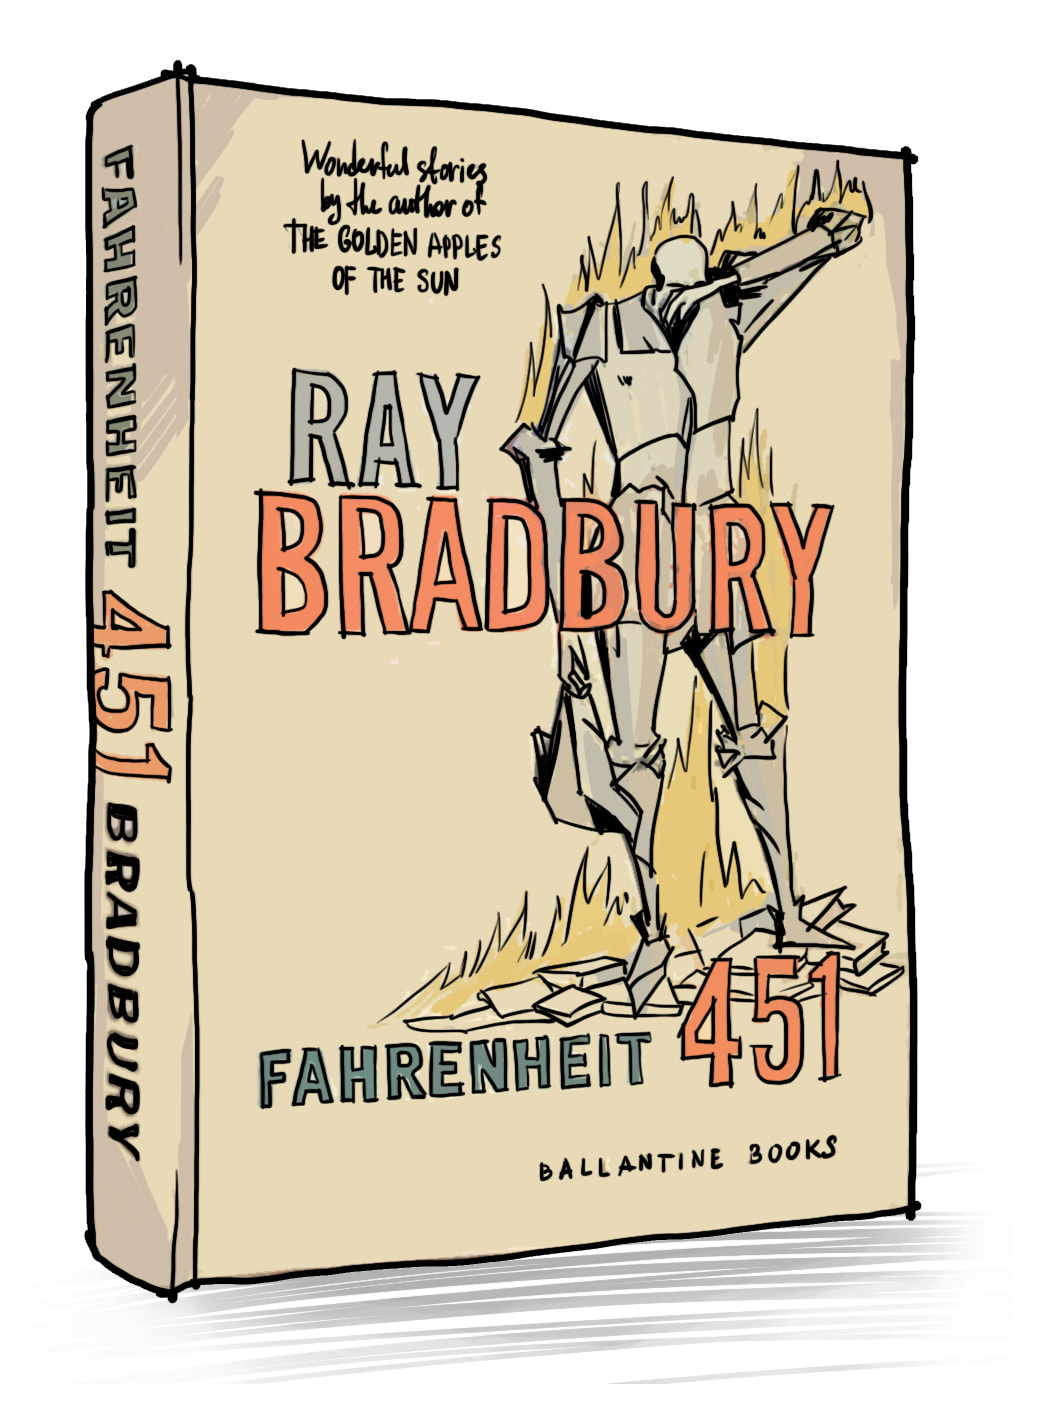 Fahrenheit 451 is a dystopian novel by Ray Bradbury published in